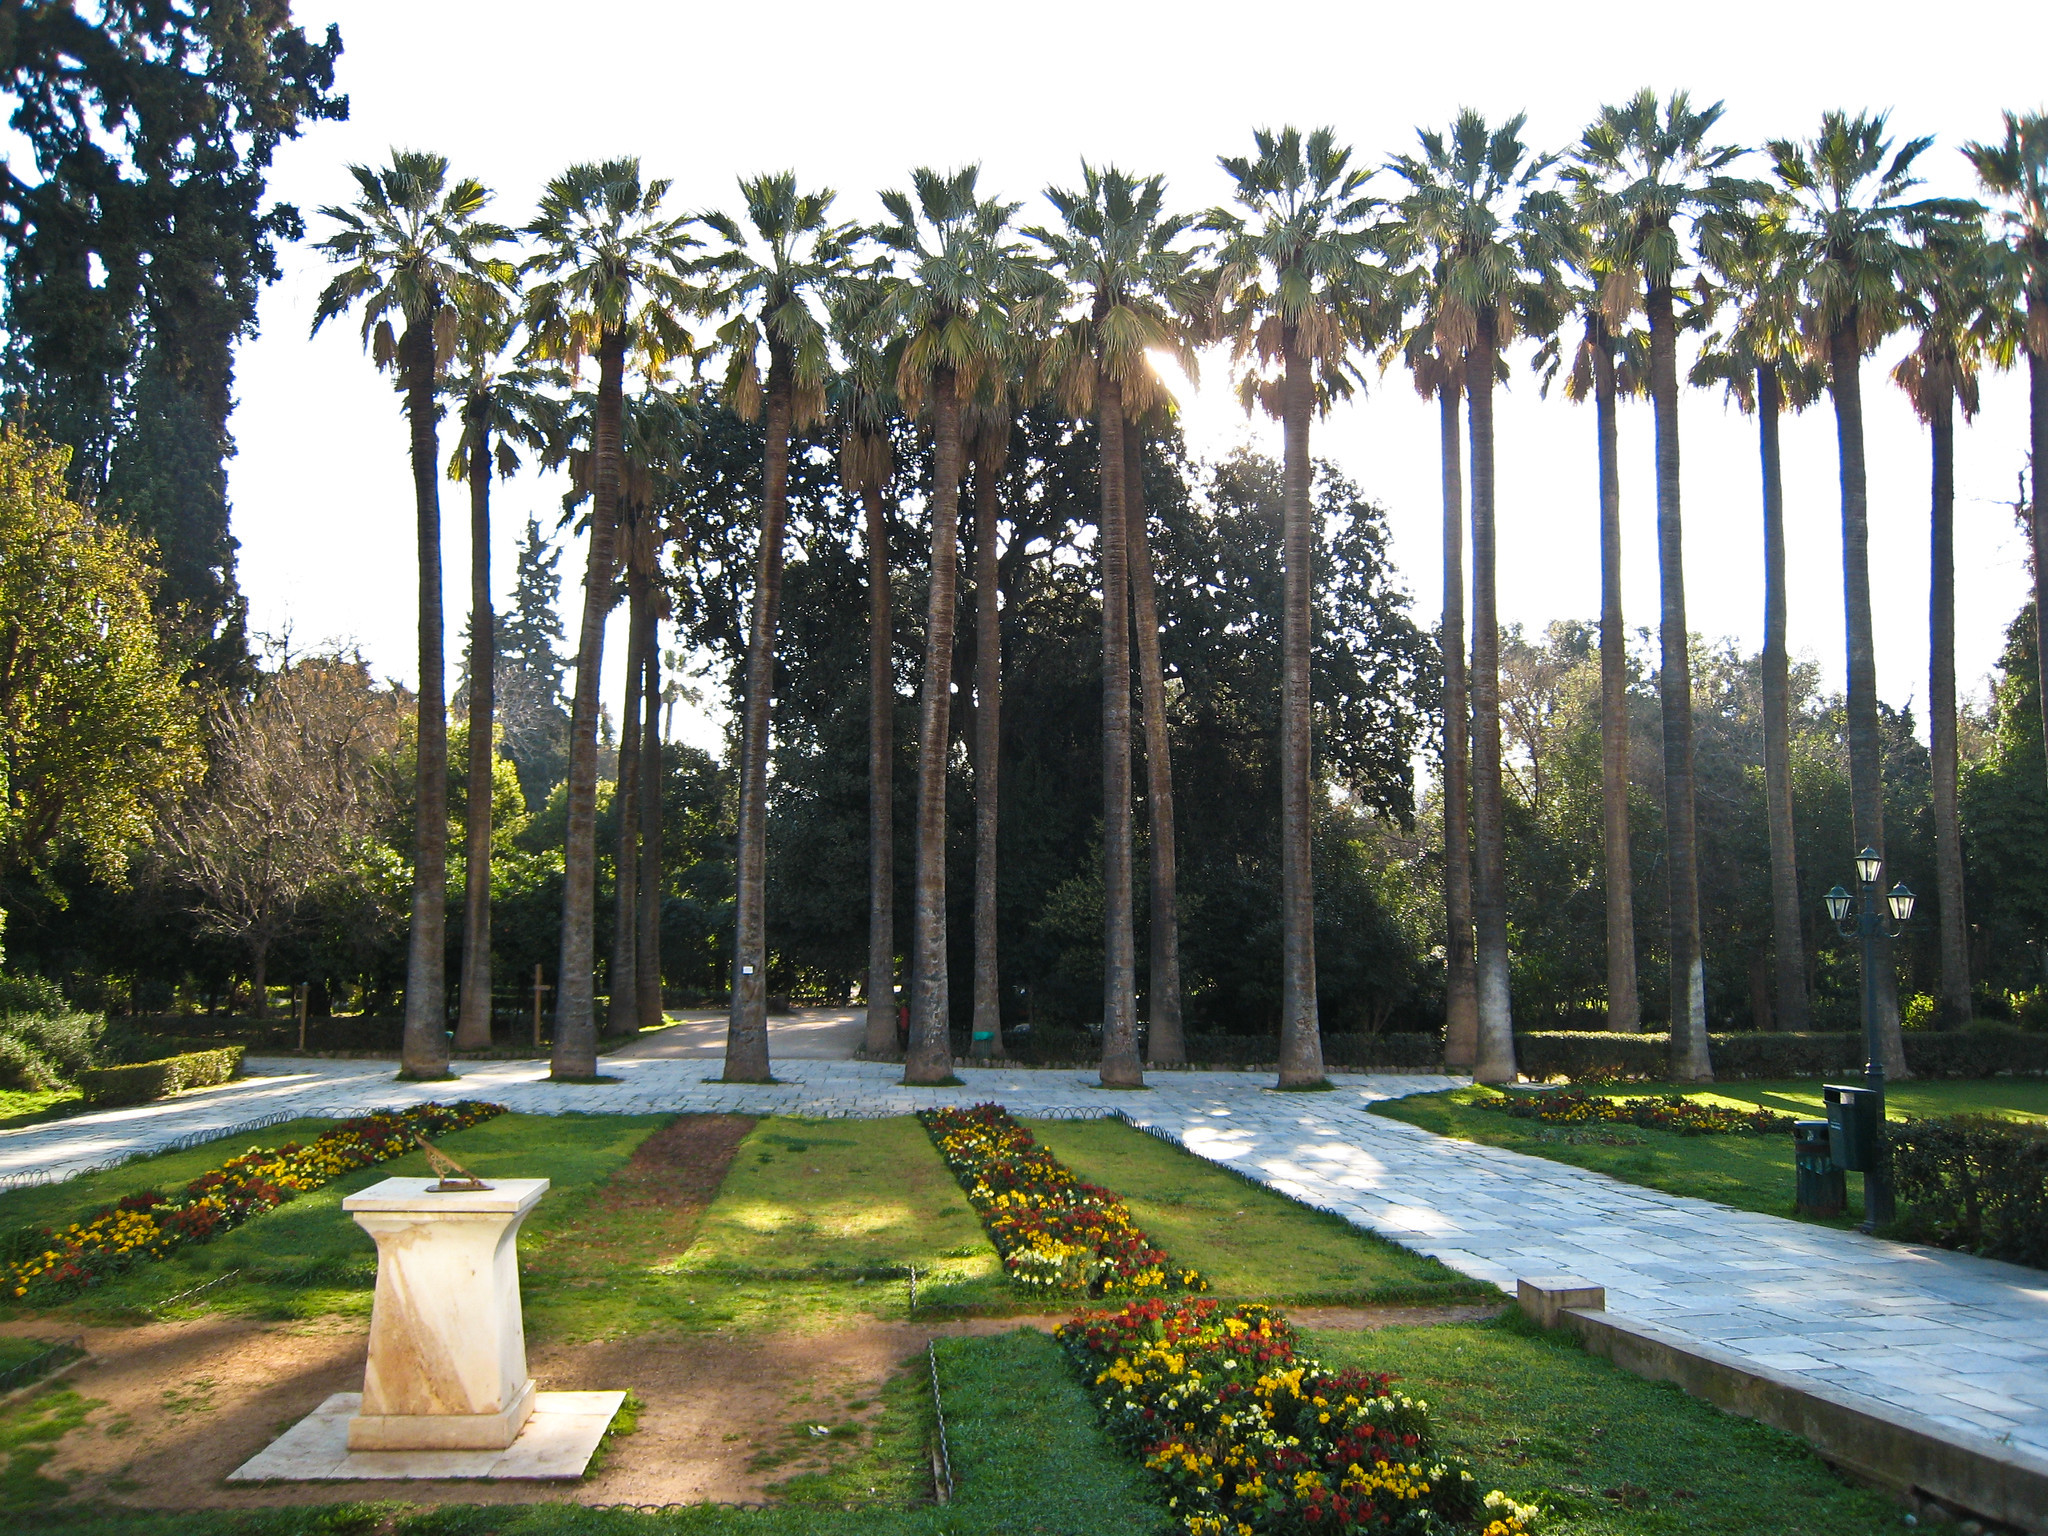 National Gardens of Athens